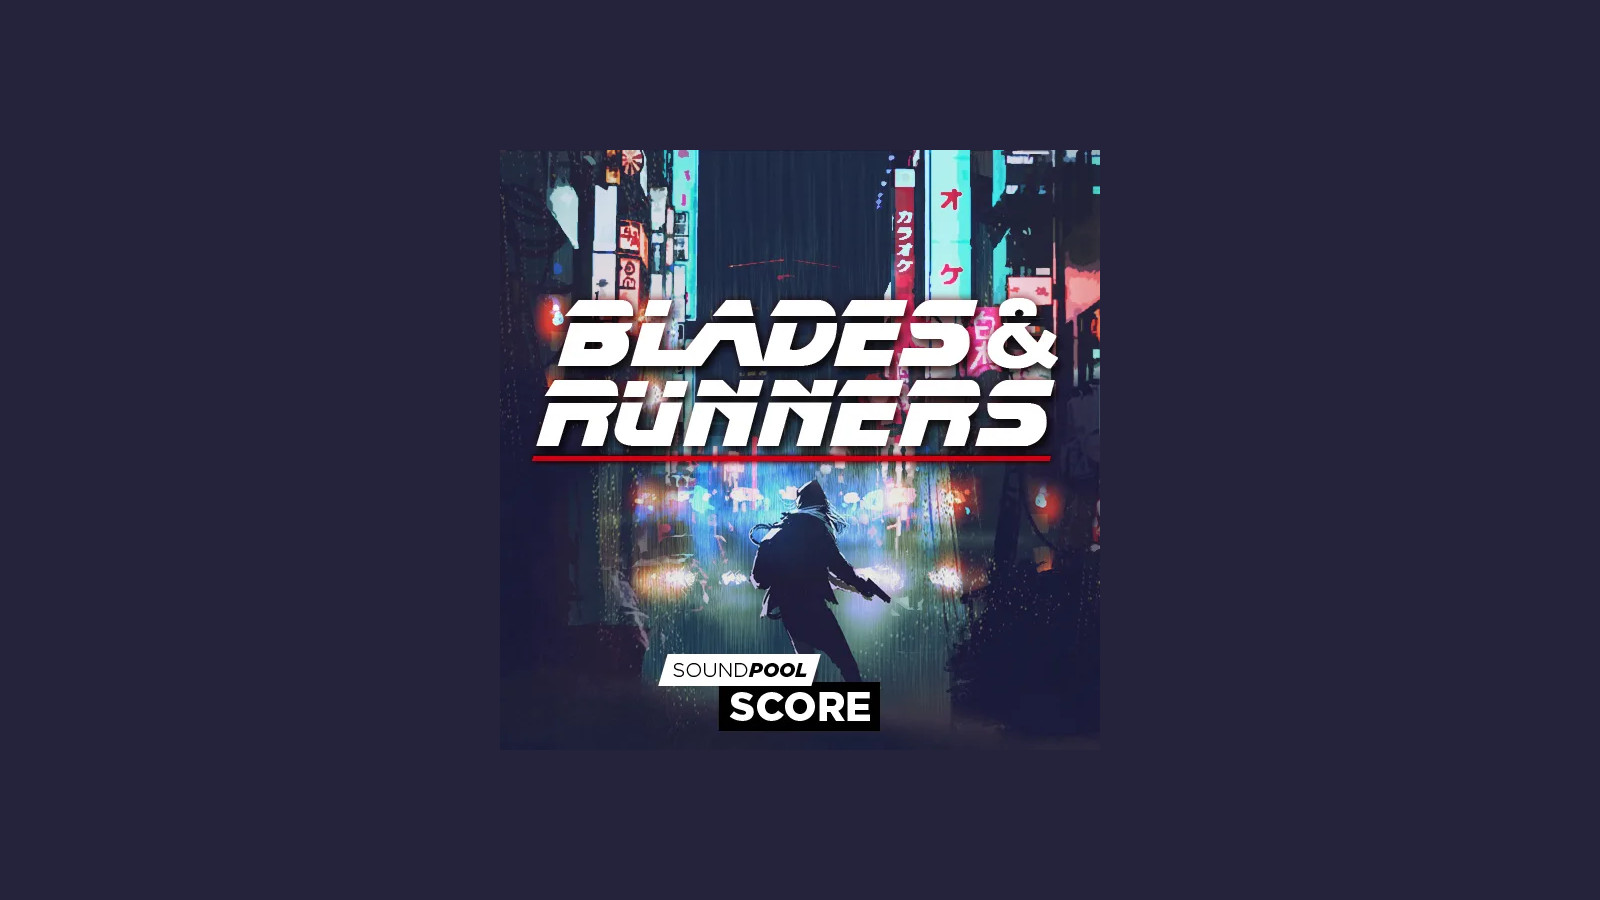 MAGIX Soundpool Blades & Runners ProducerPlanet CD Key [USD 5.65]